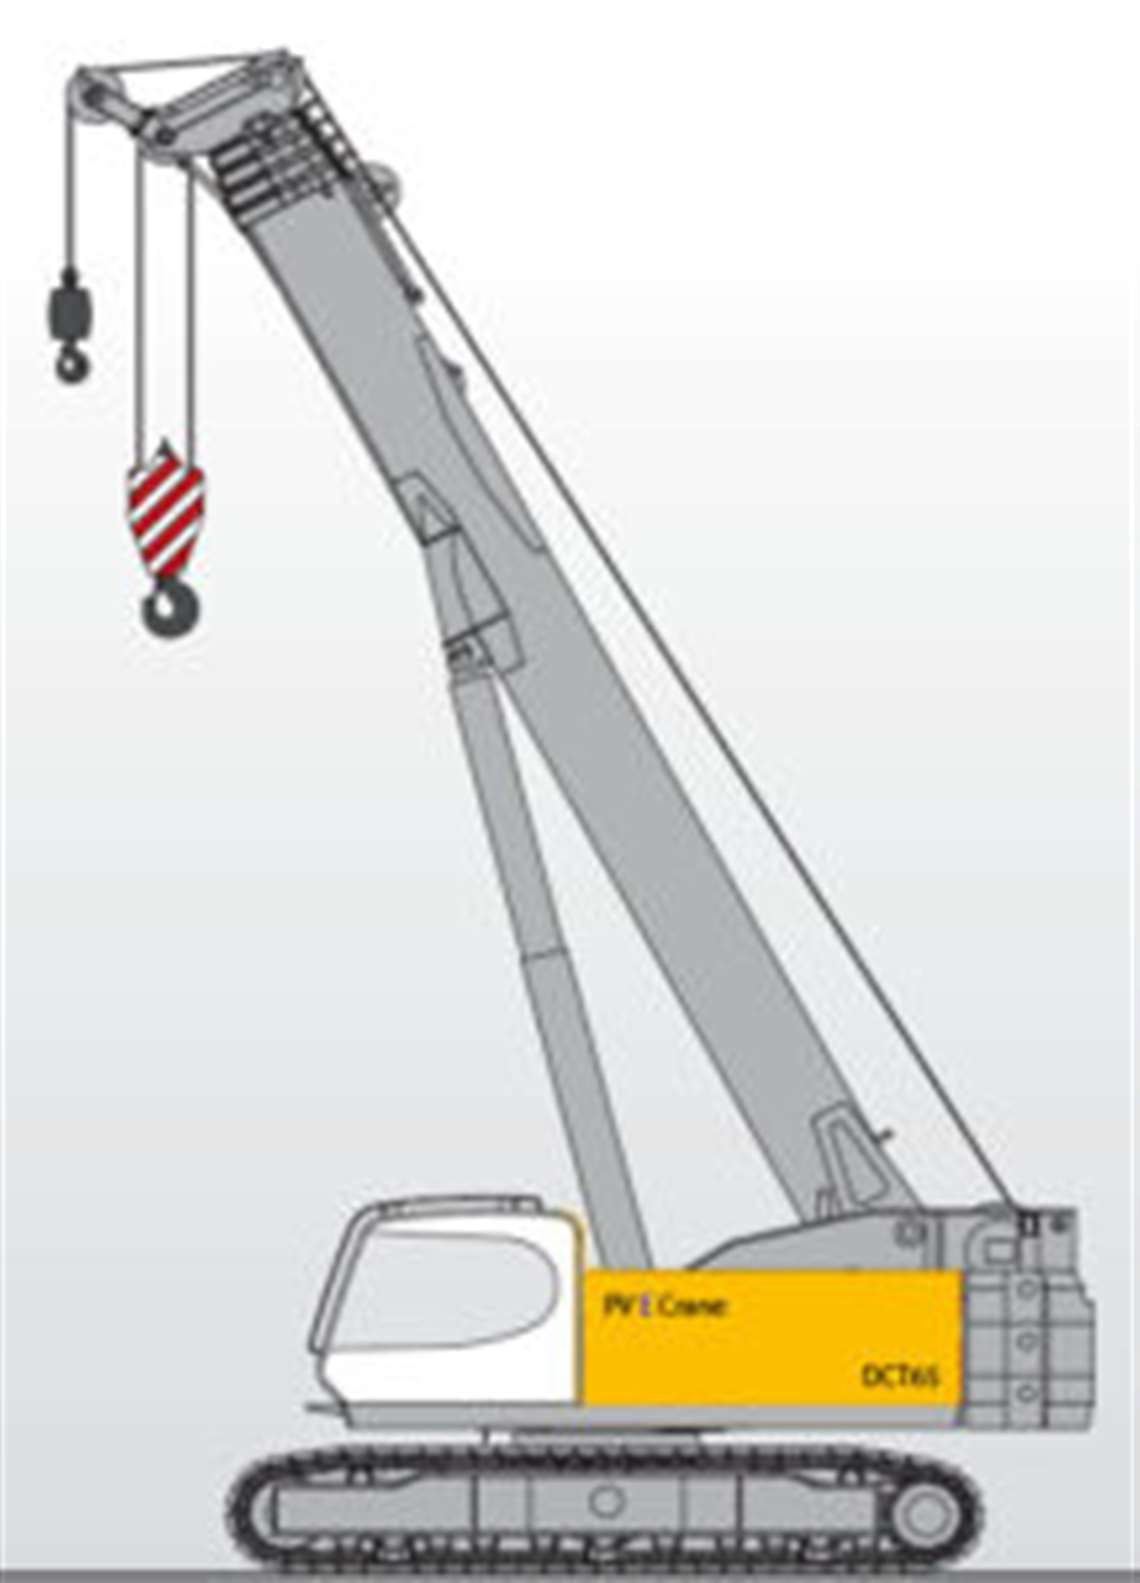 PVE起重机型号ECT65是一个65吨容量的伸缩臂电池电履带起重机